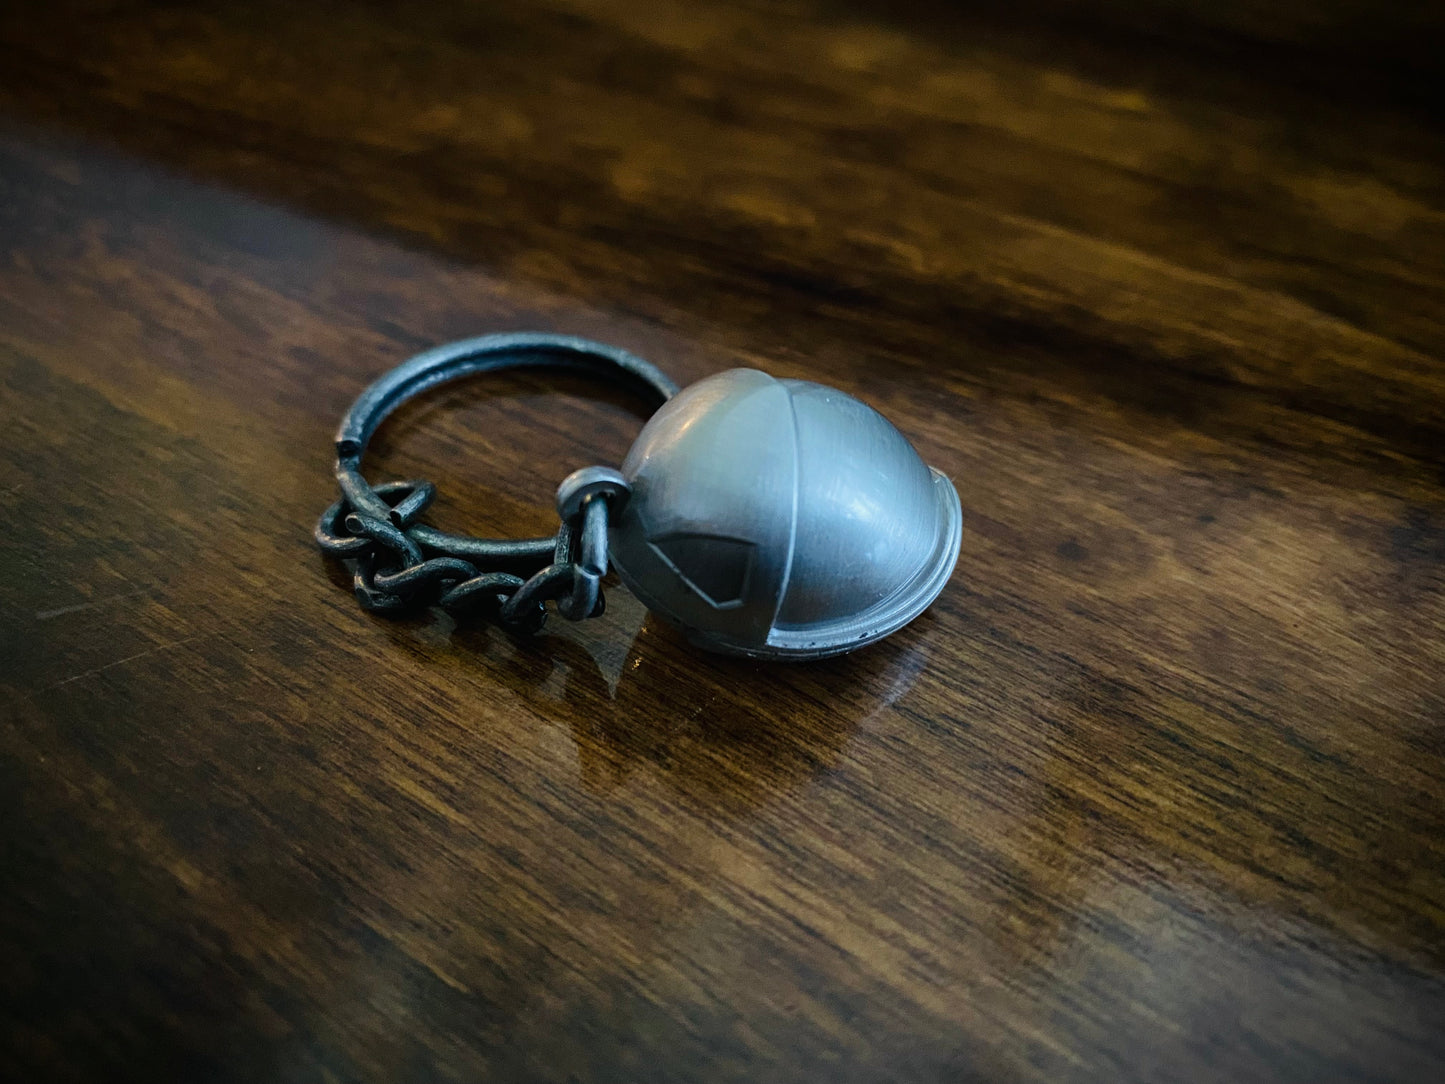 Space Helmet Keychain (Just like Inspiration4)